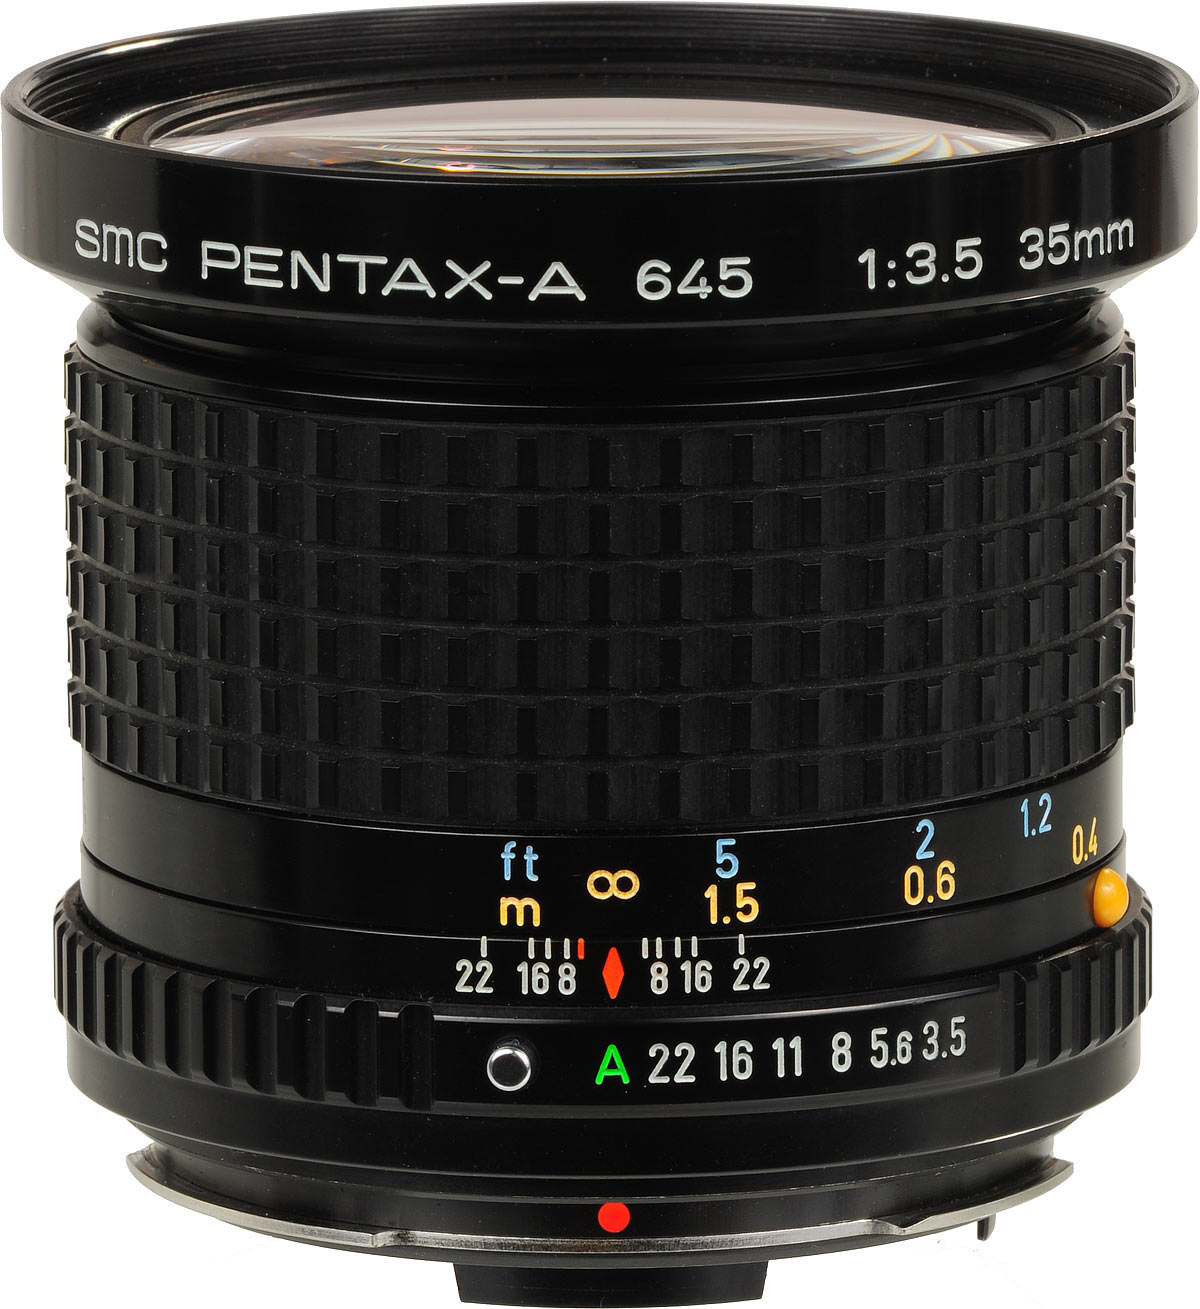 PENTAX - PENTAX K-7 28-200mmレンズキット #1640の+t7.someotherhost.com